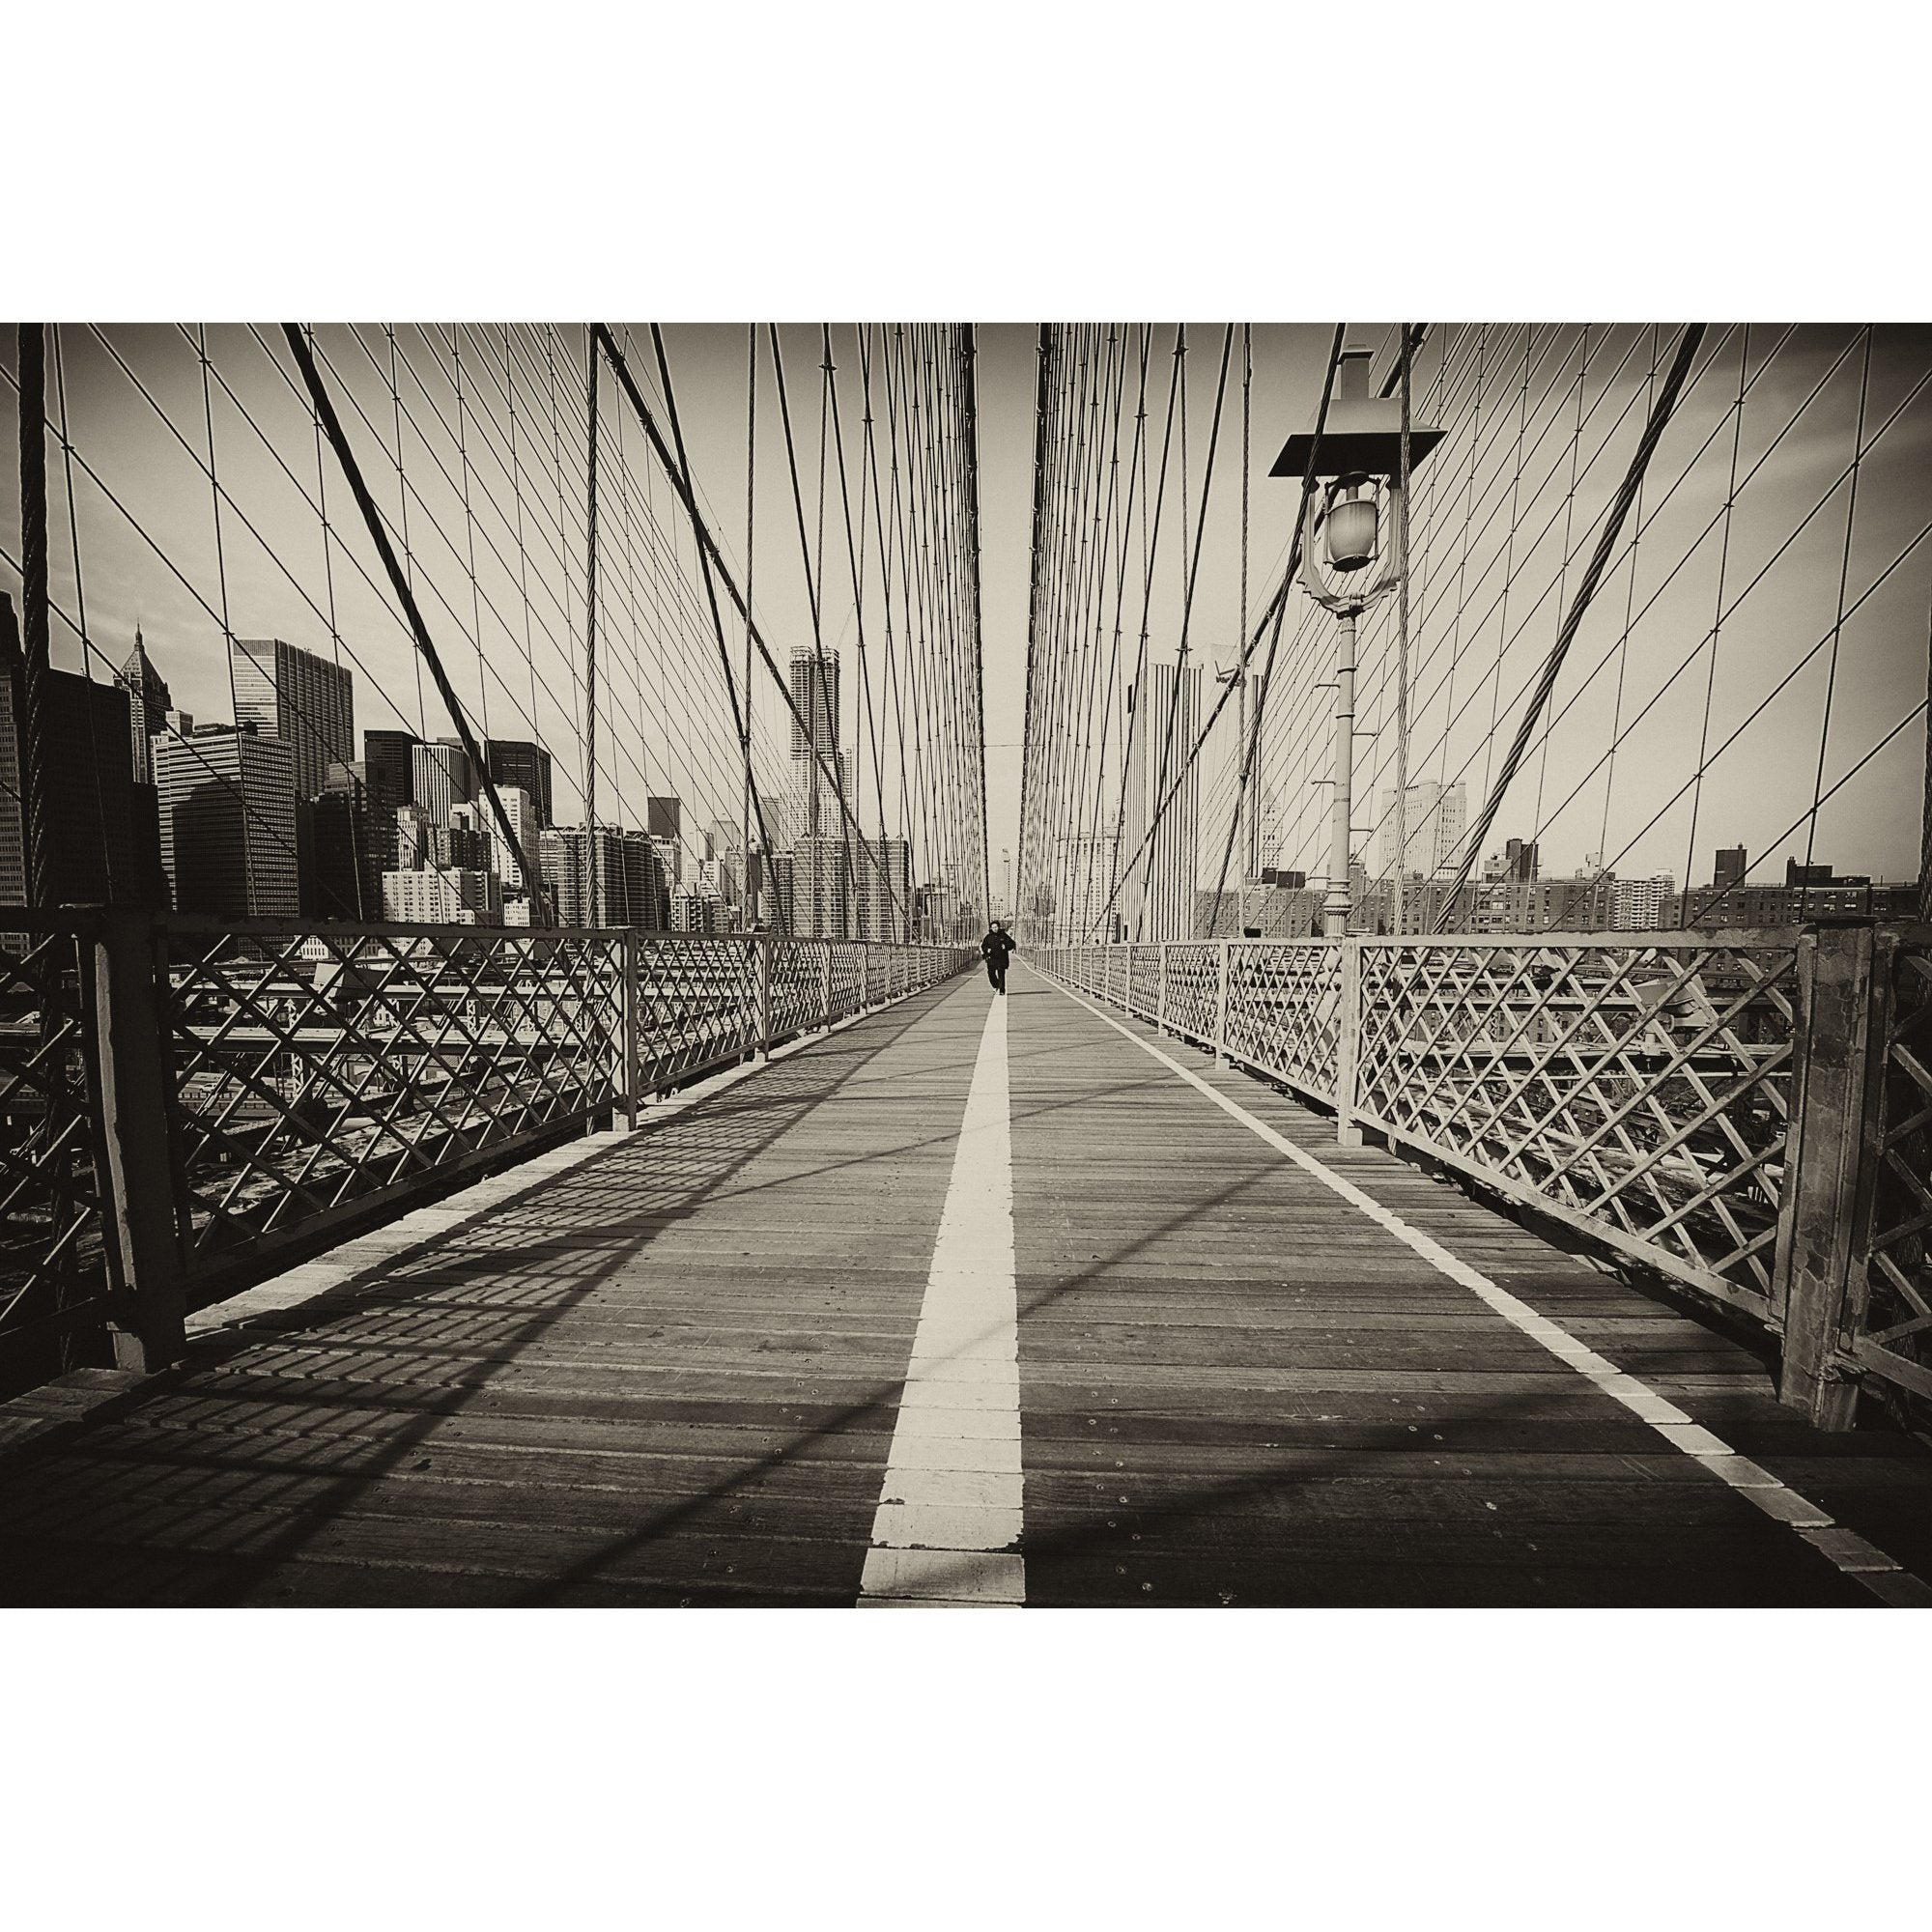 Brooklyn Bridge - Per Mikaelsson - Photo Print on Aluminum on The Good Shop Online Store